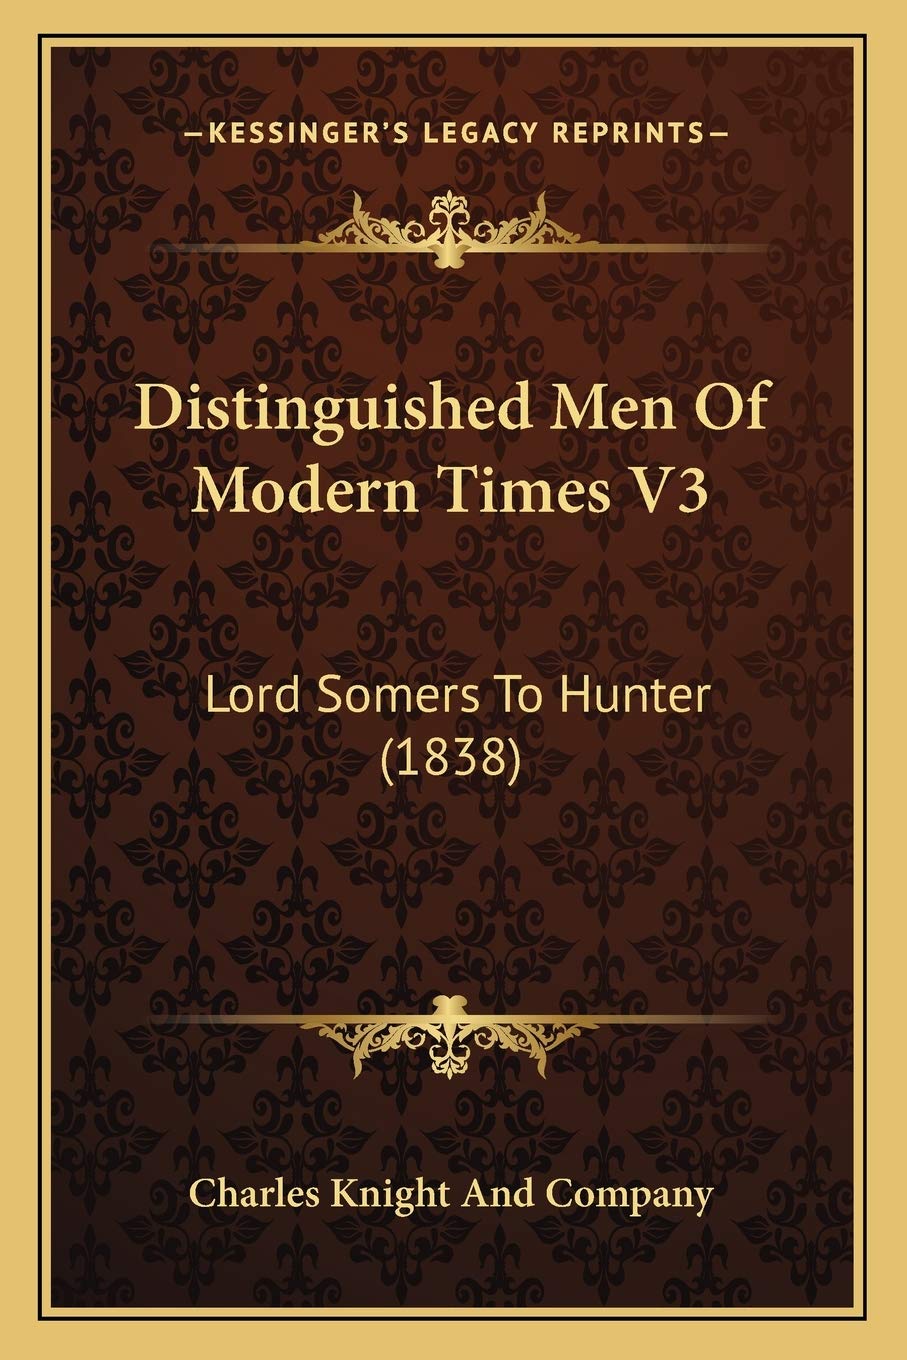 Modern Times V3: Lord Somers & Hunter